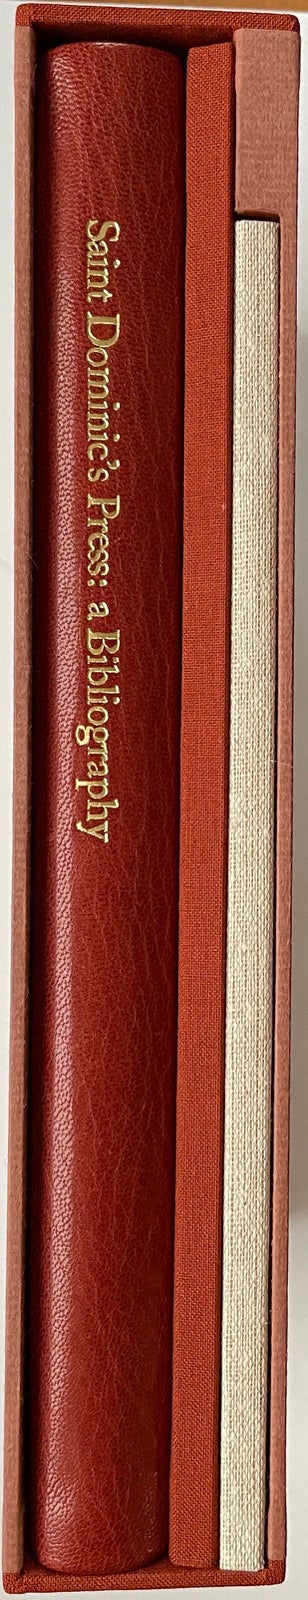 Saint Dominic's Press, A Bibliography 1916-1937.